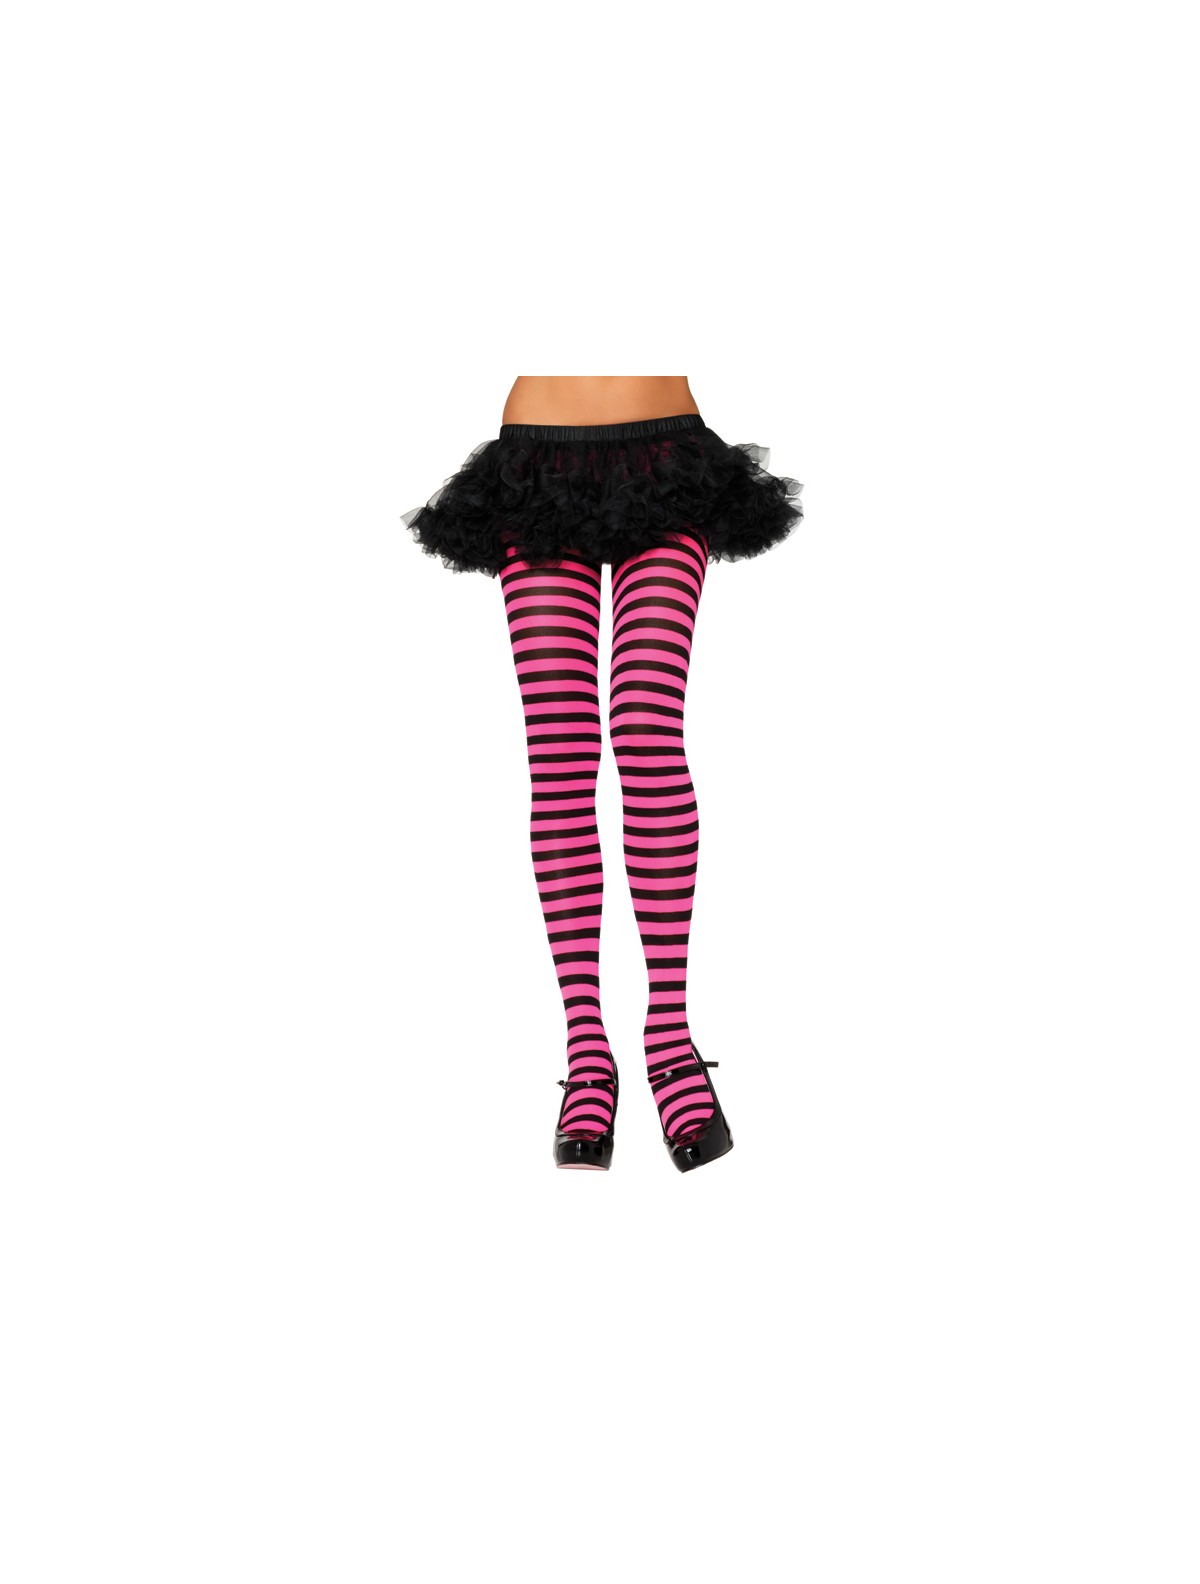 https://www.pantyhose-stockings-hosiery.com/images/products/LA-7100-L-4.jpeg